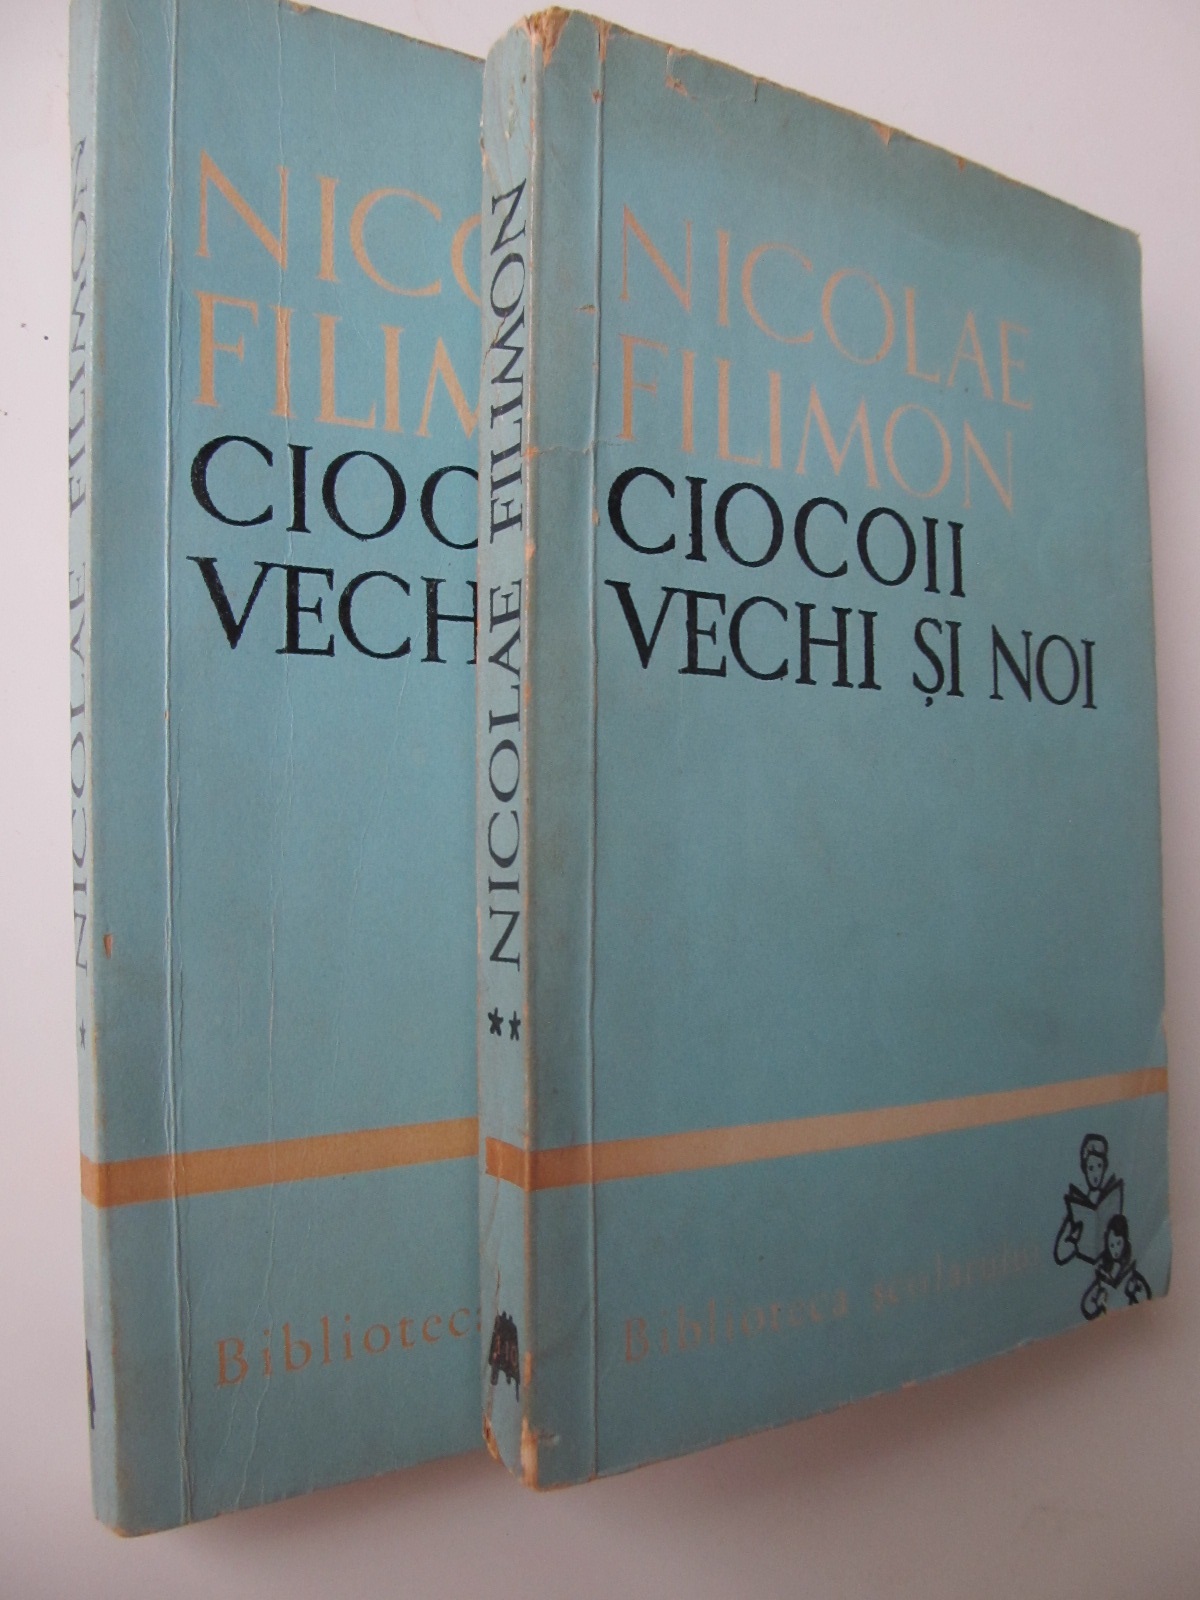 Ciocoii vechi si noi (2 vol.) - Nicolae Filimon | Detalii carte